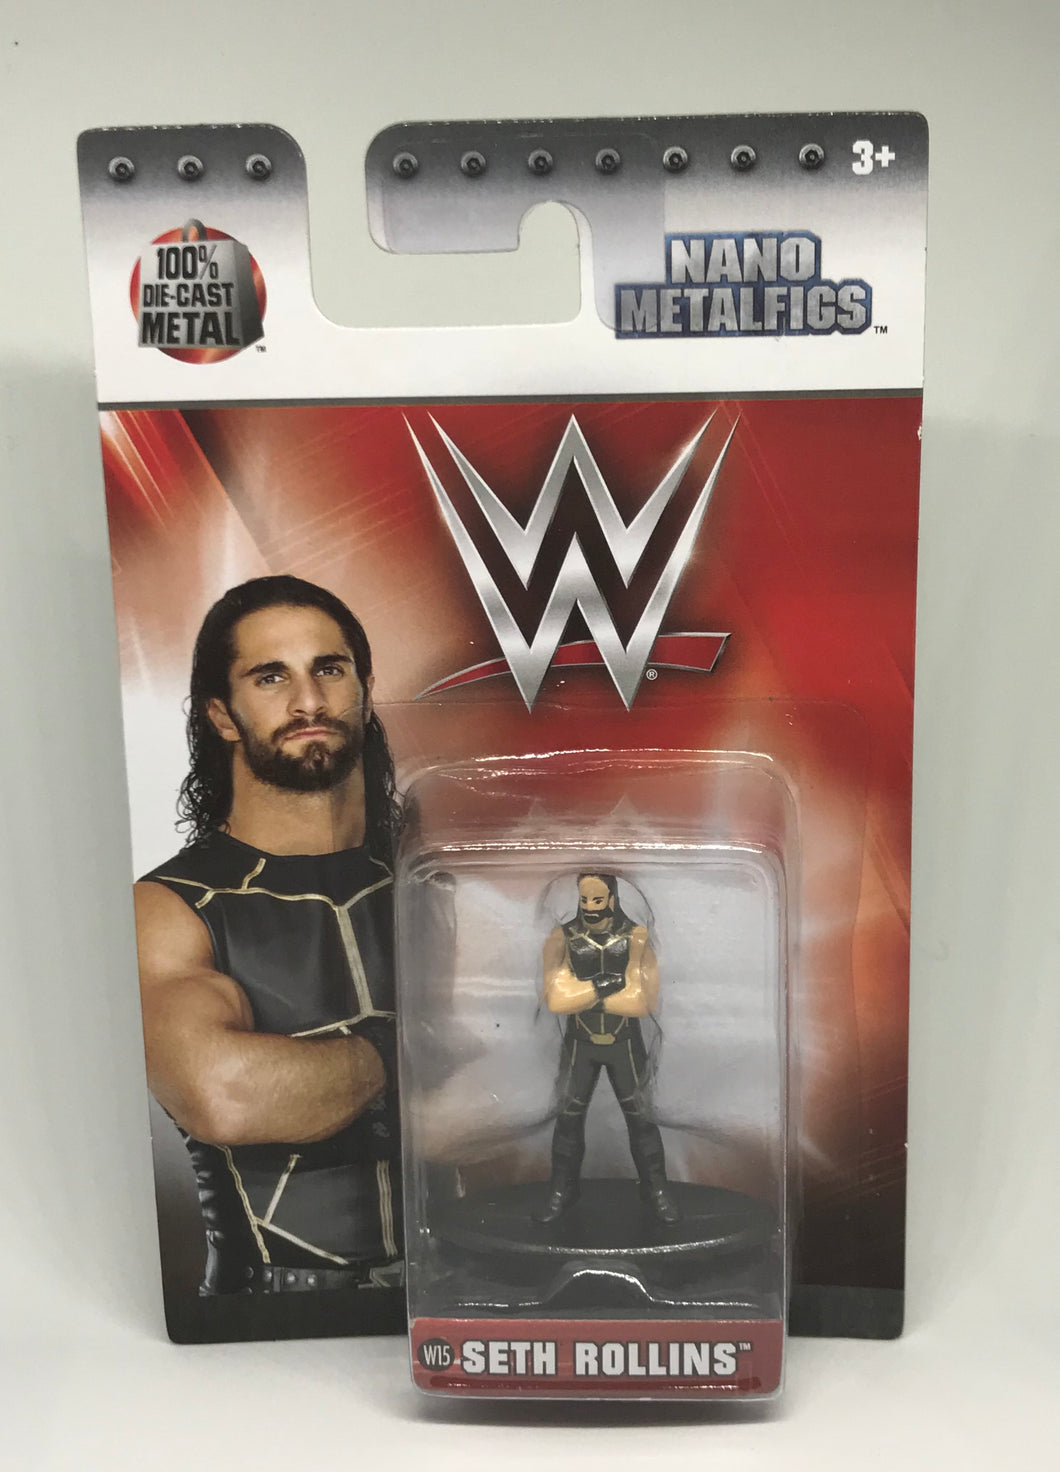 WWE - Nano Metalfigs Single Pack Seth Rollins